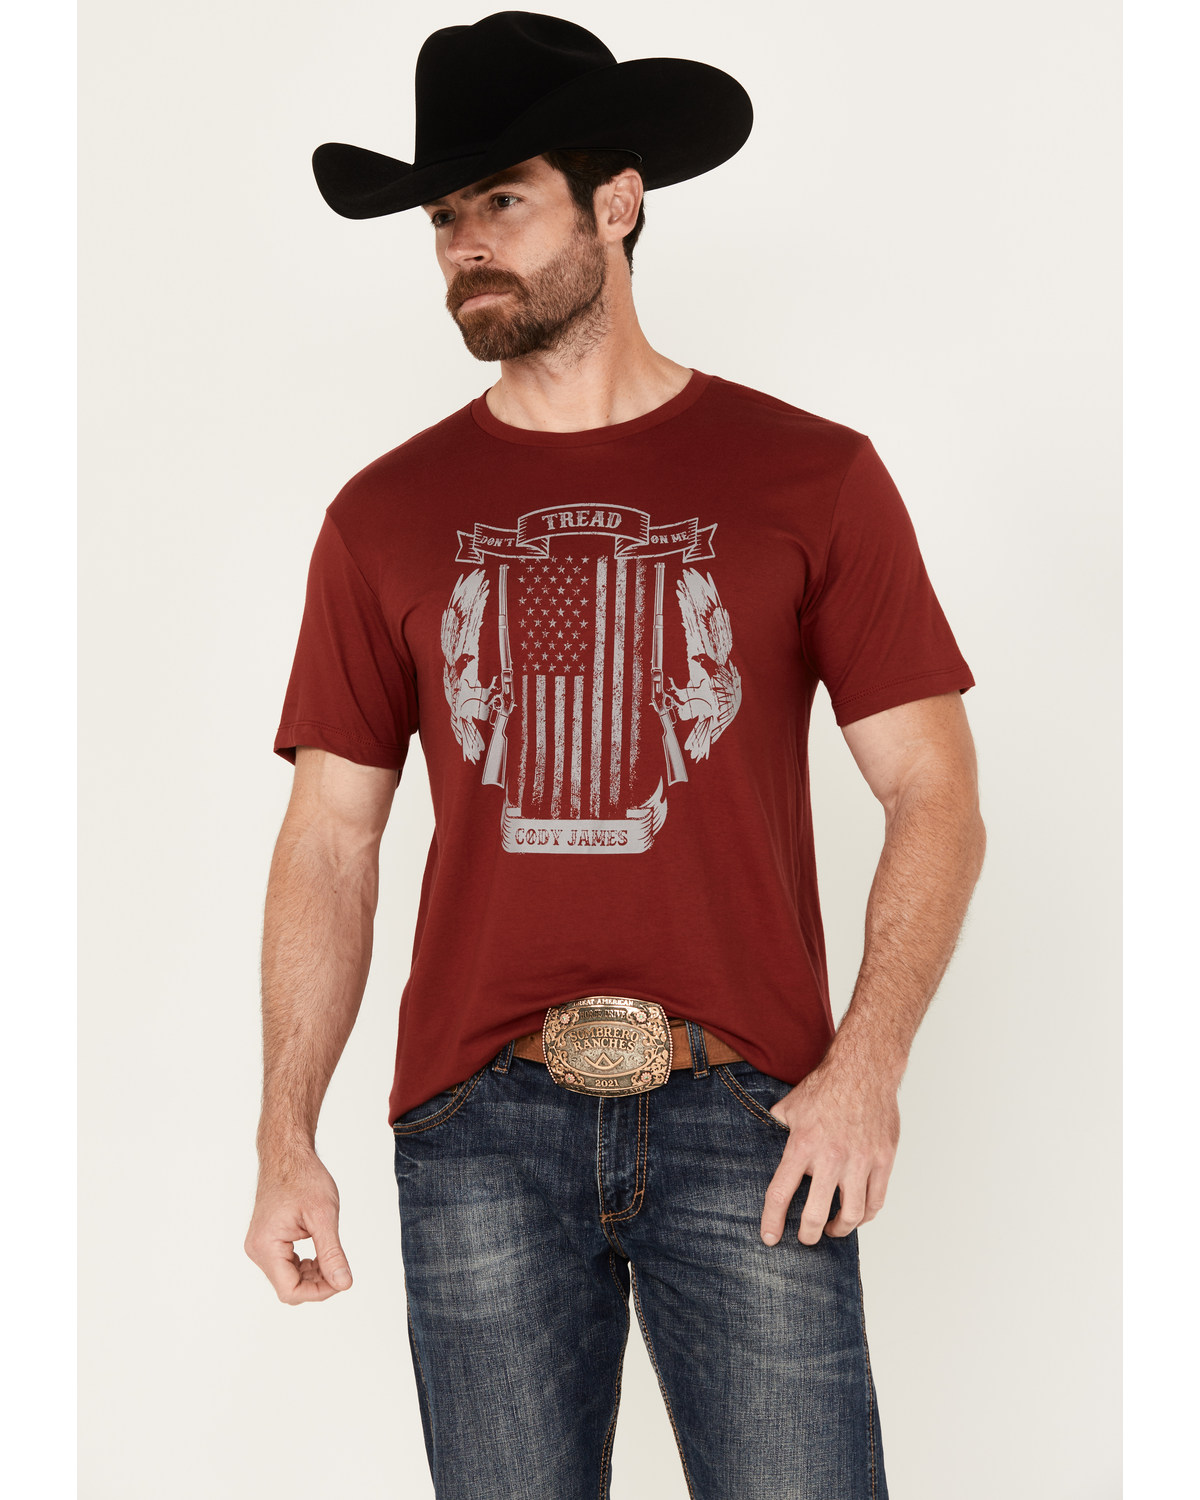 Cody James Men's Tread Flag Short Sleeve Graphic T-Shirt